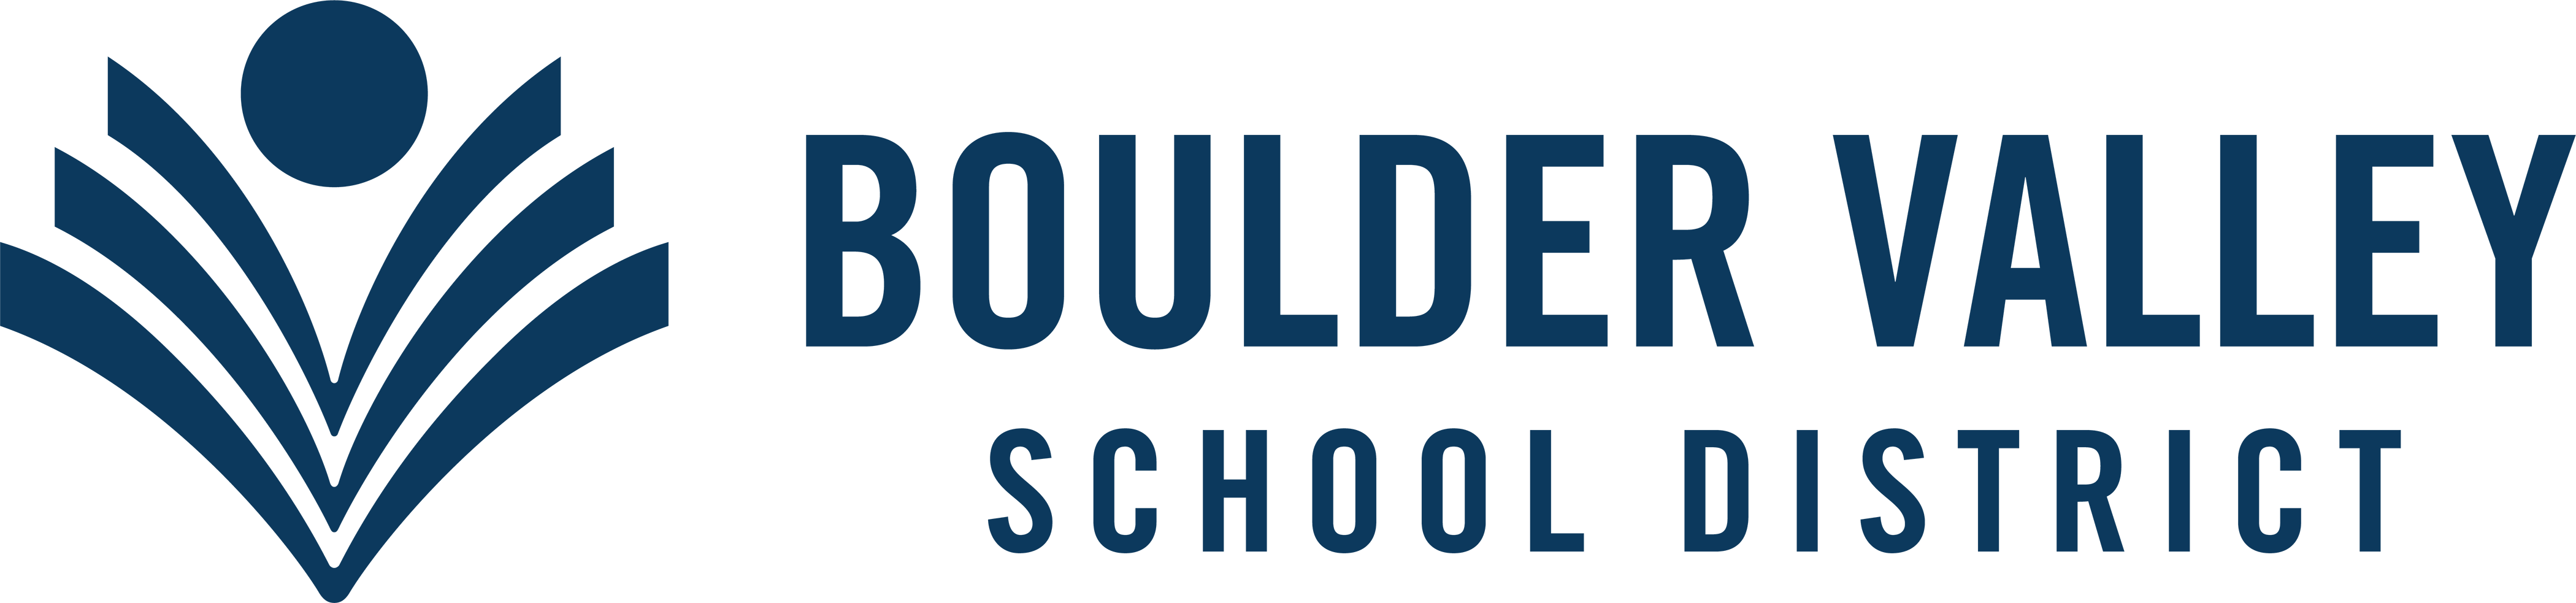 Organization logo of Boulder Valley School District